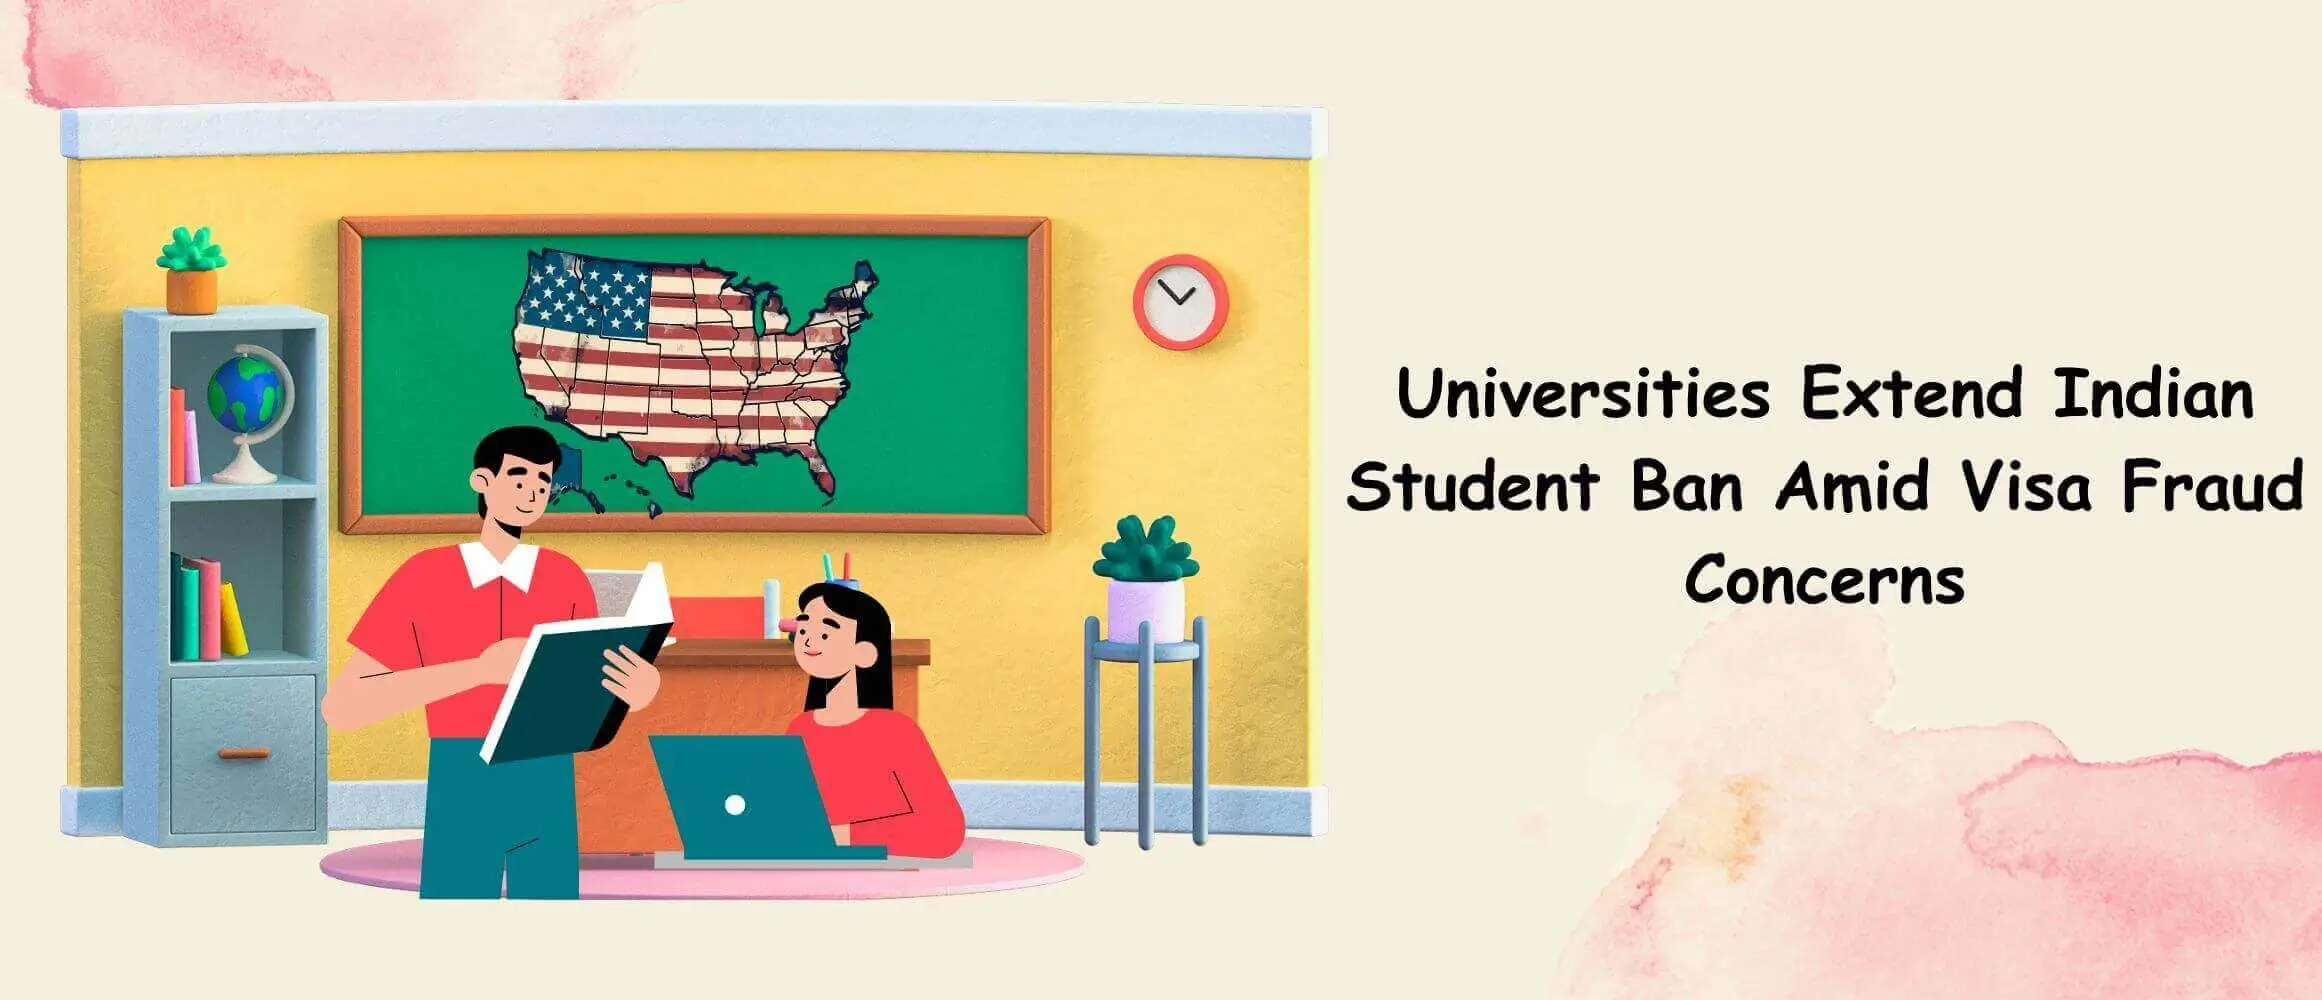 Universities Extend Indian Student Ban Amid Visa Fraud Concerns